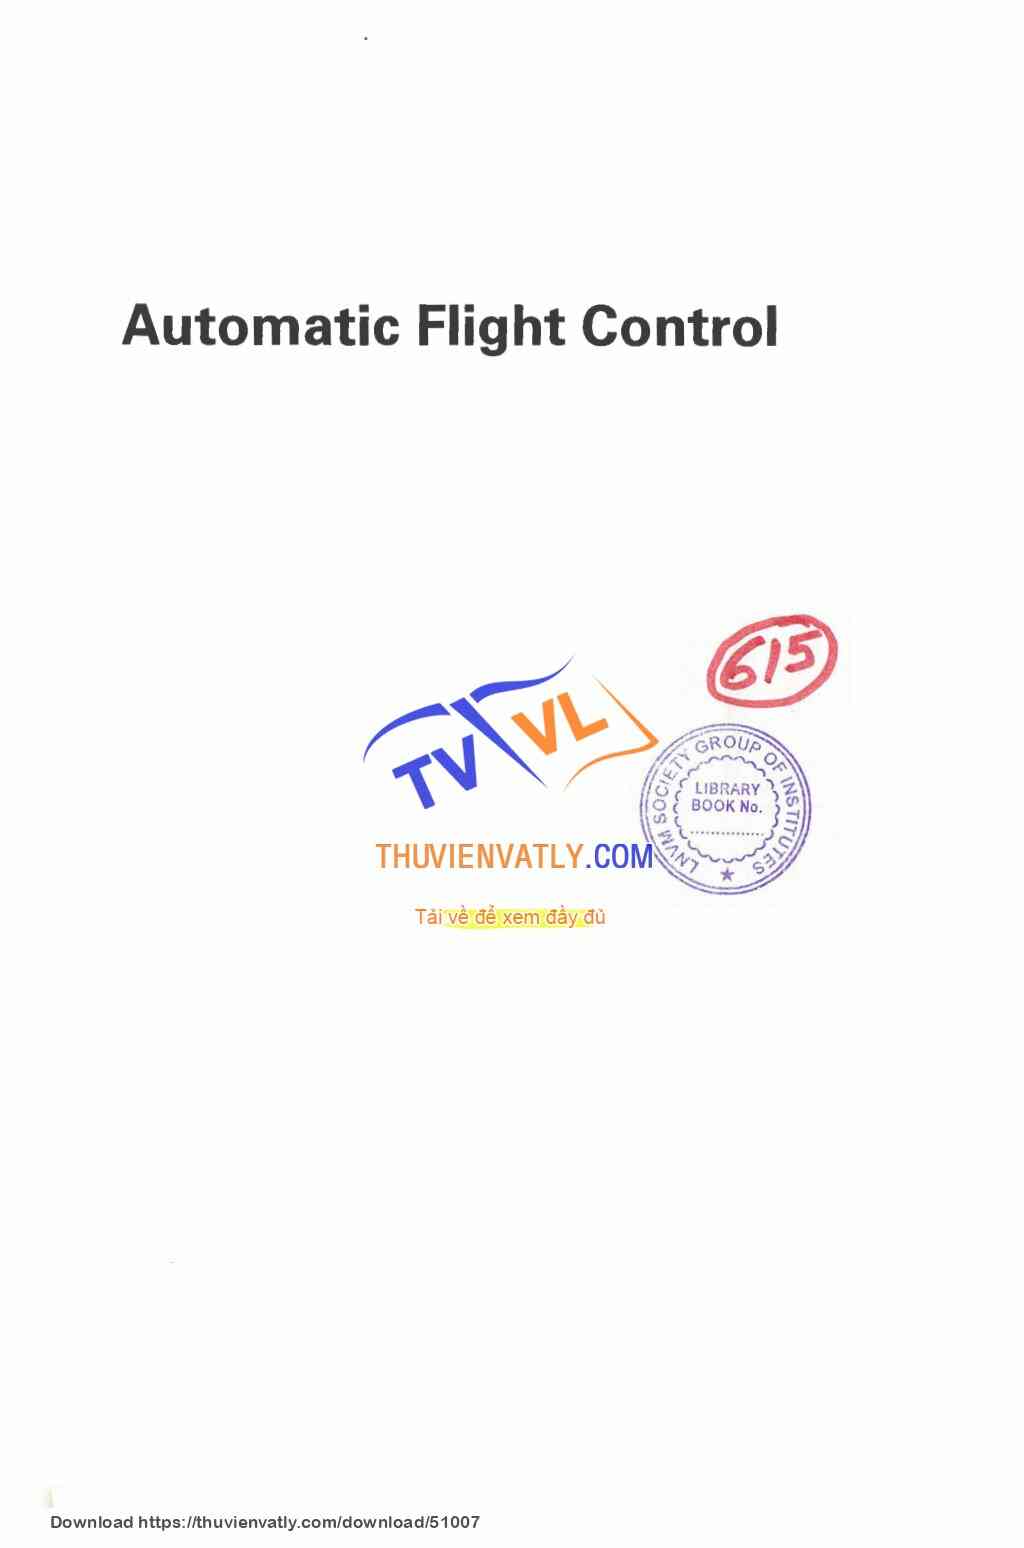 Automatic flight control